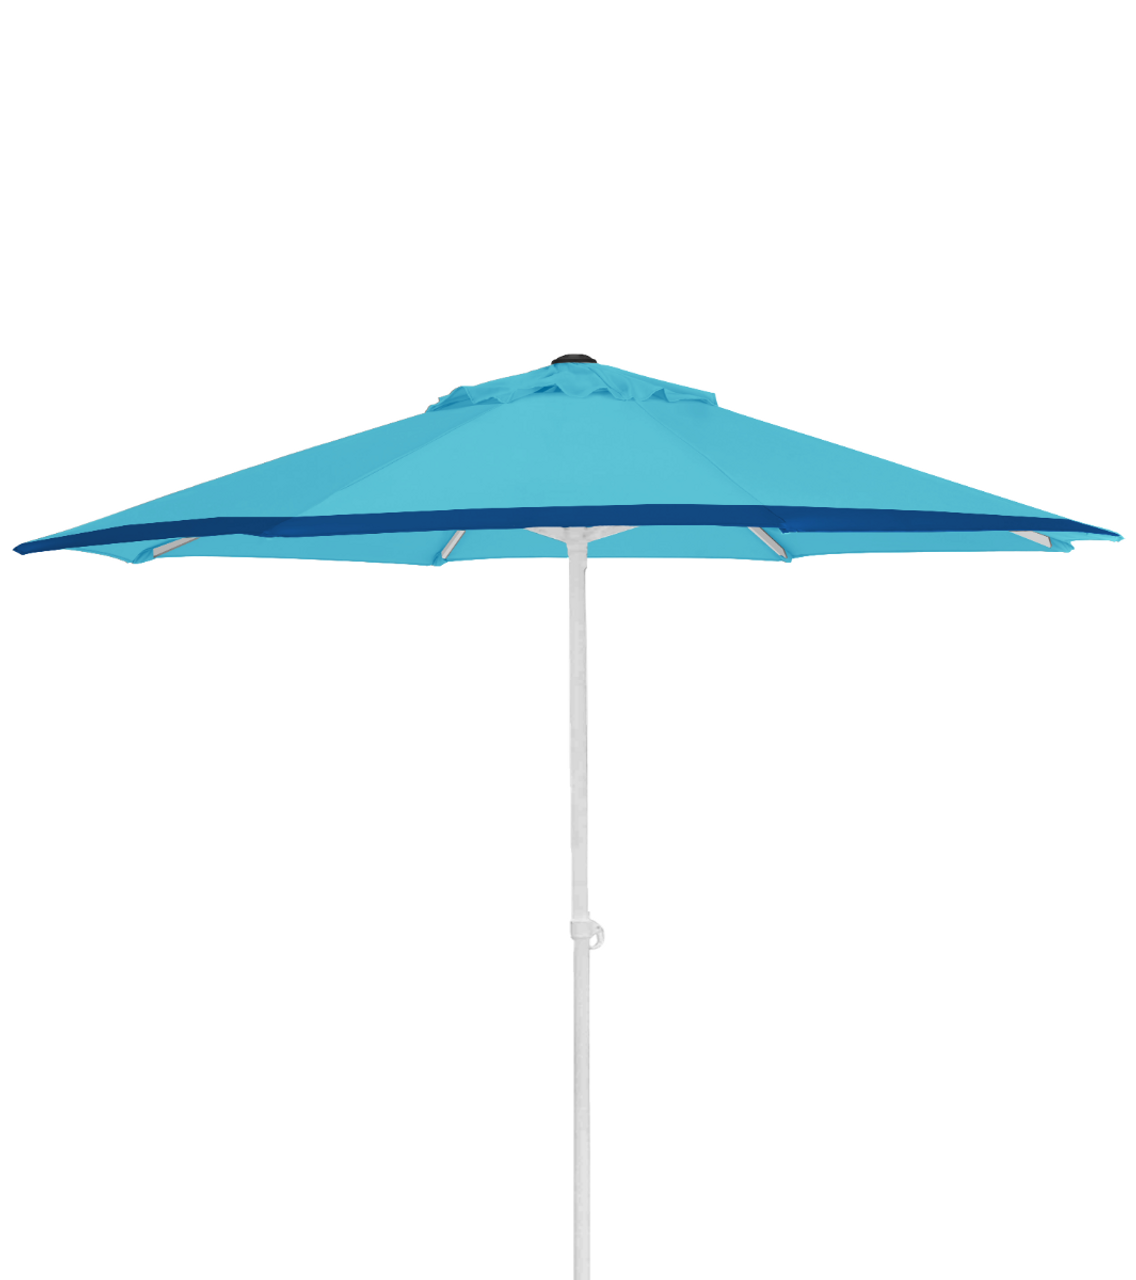 Caribbean Joe MS76 7' Market Style Beach Umbrella